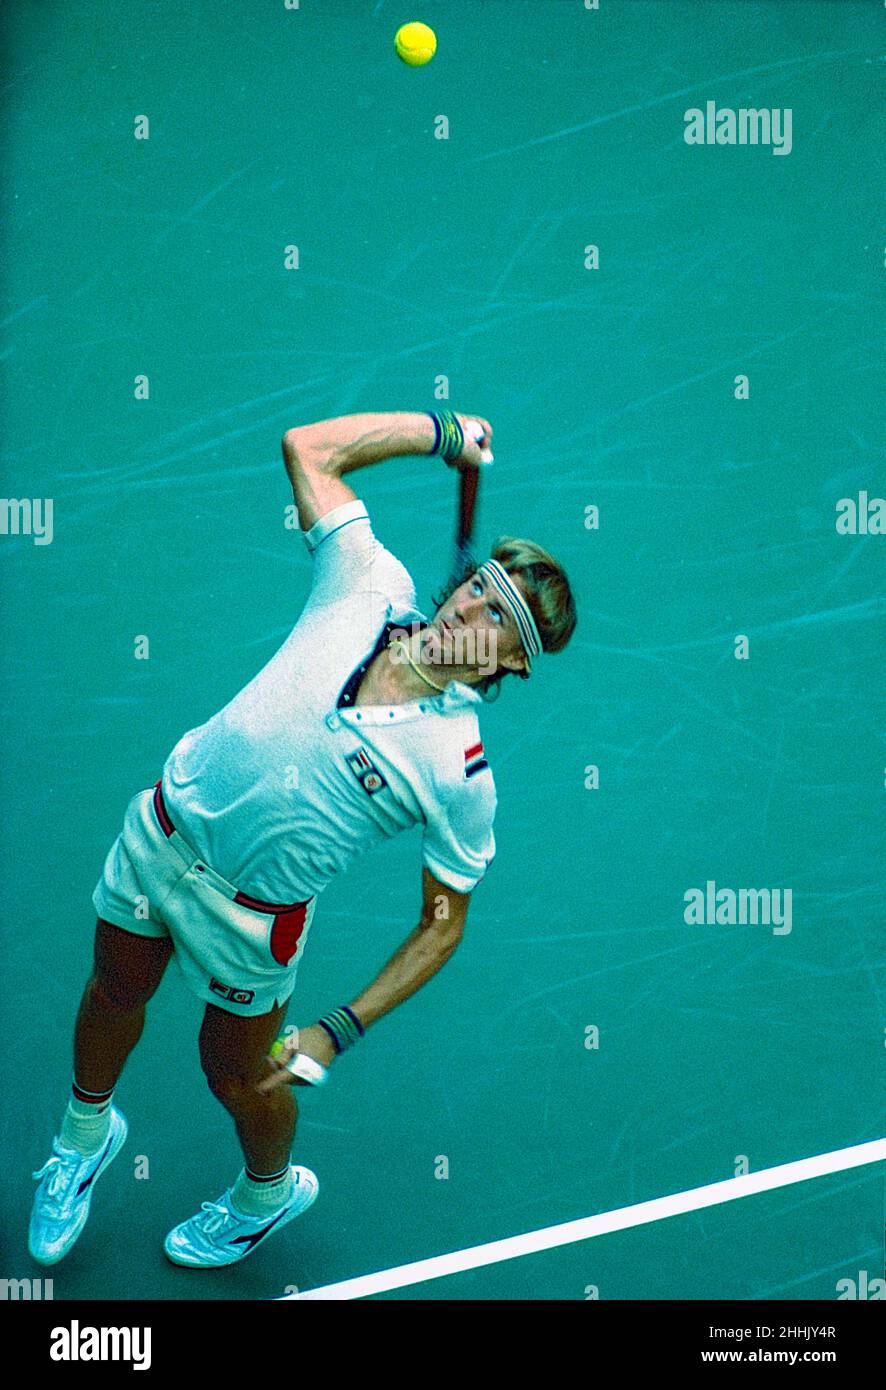 Bjorn Borg at the 1980 US Open Tennis. Stock Photo